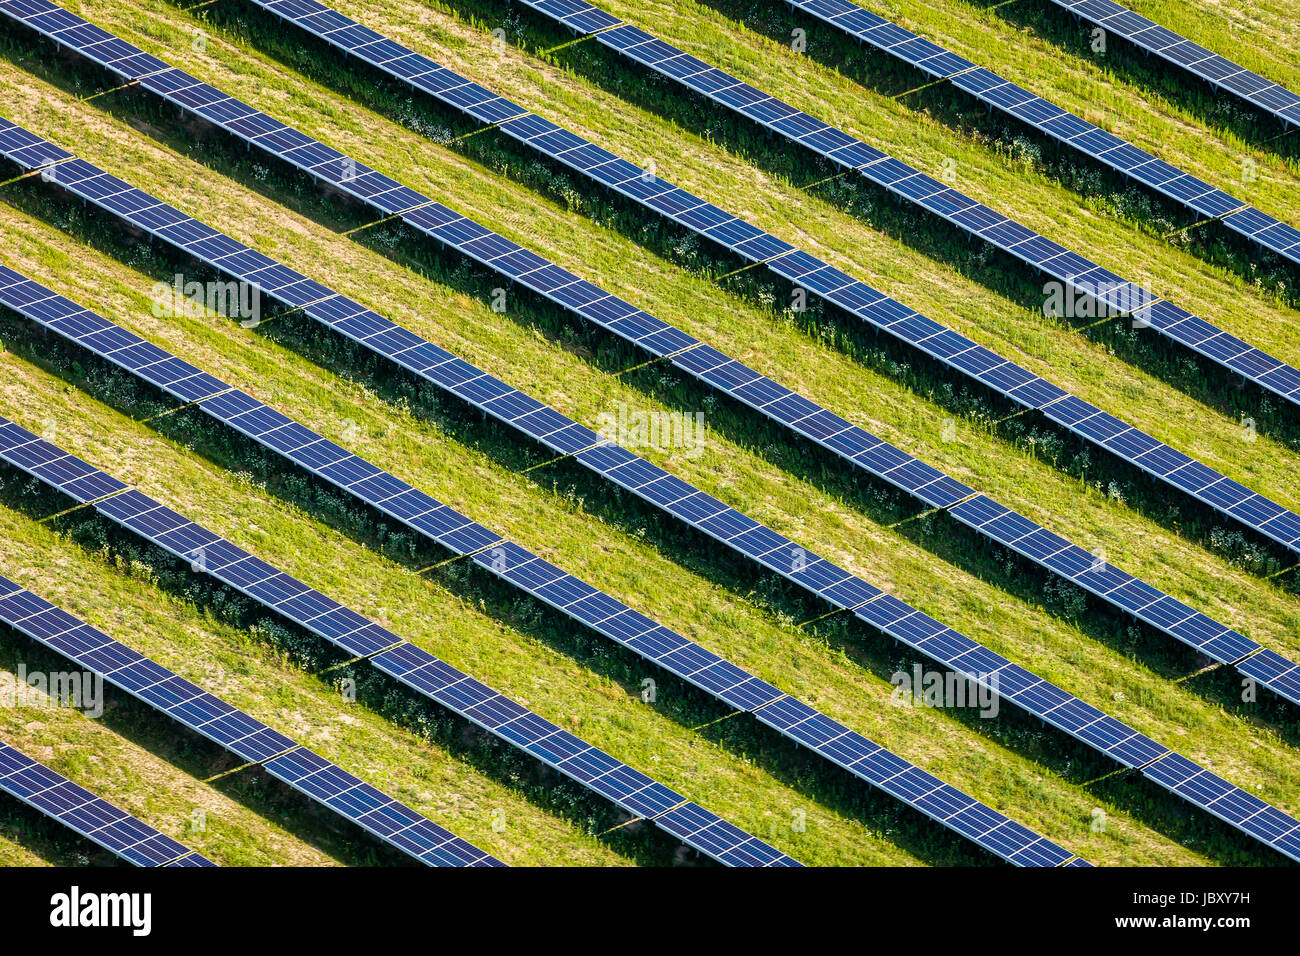 Aerial view of a Solar Farm. Stock Photo